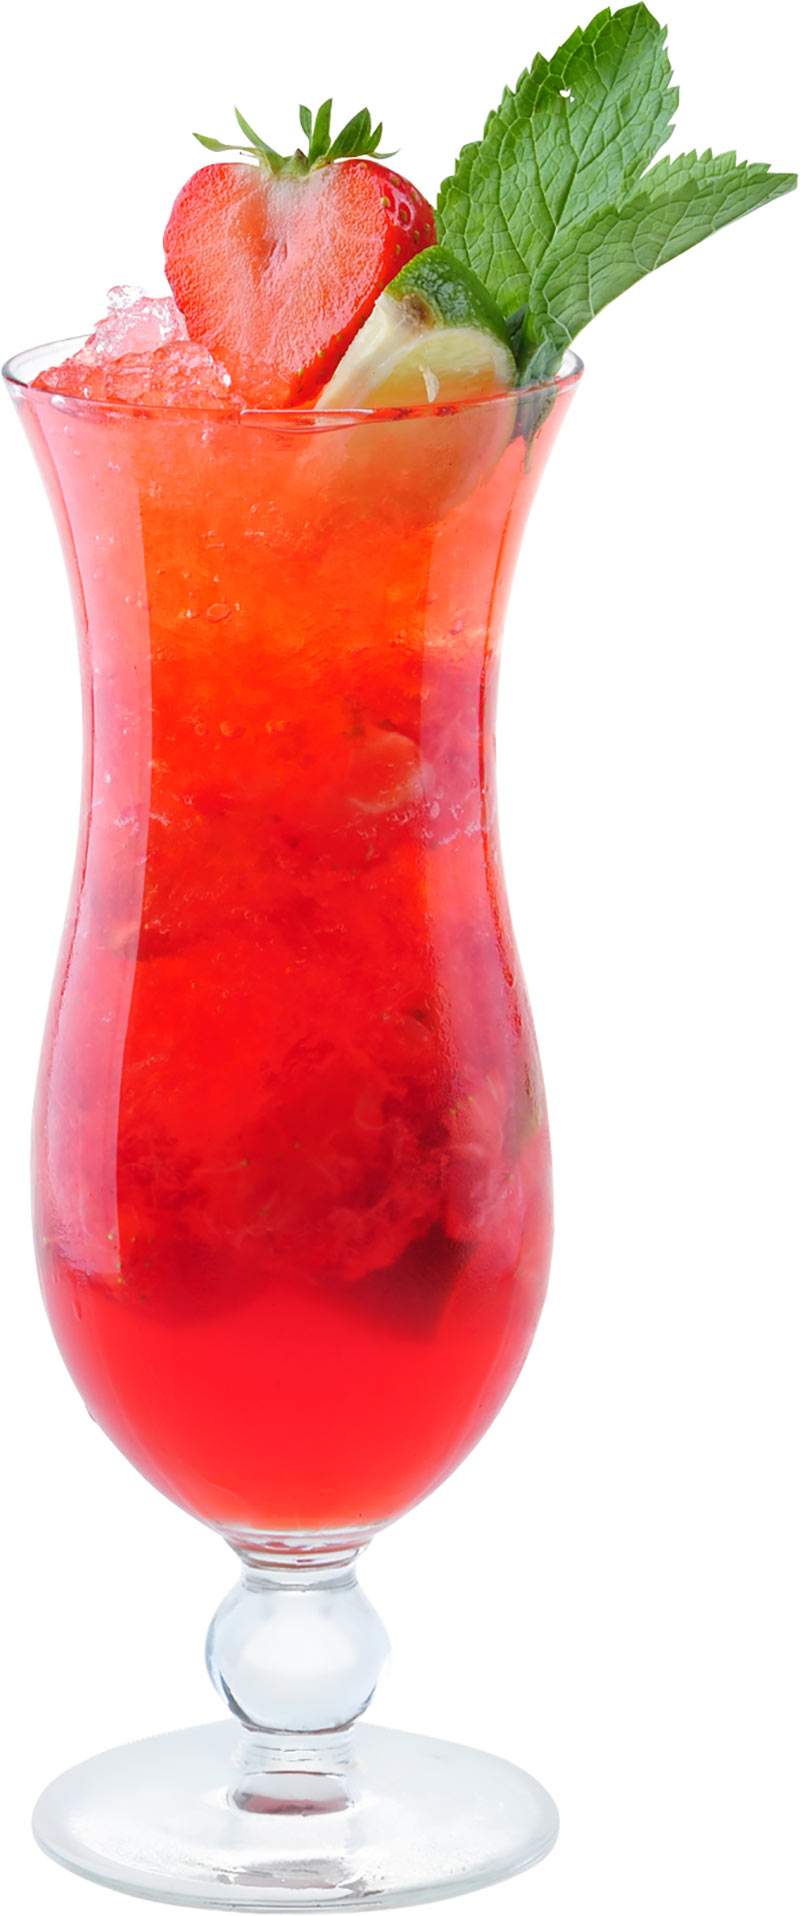 How to Make the Strawberry Lemonade